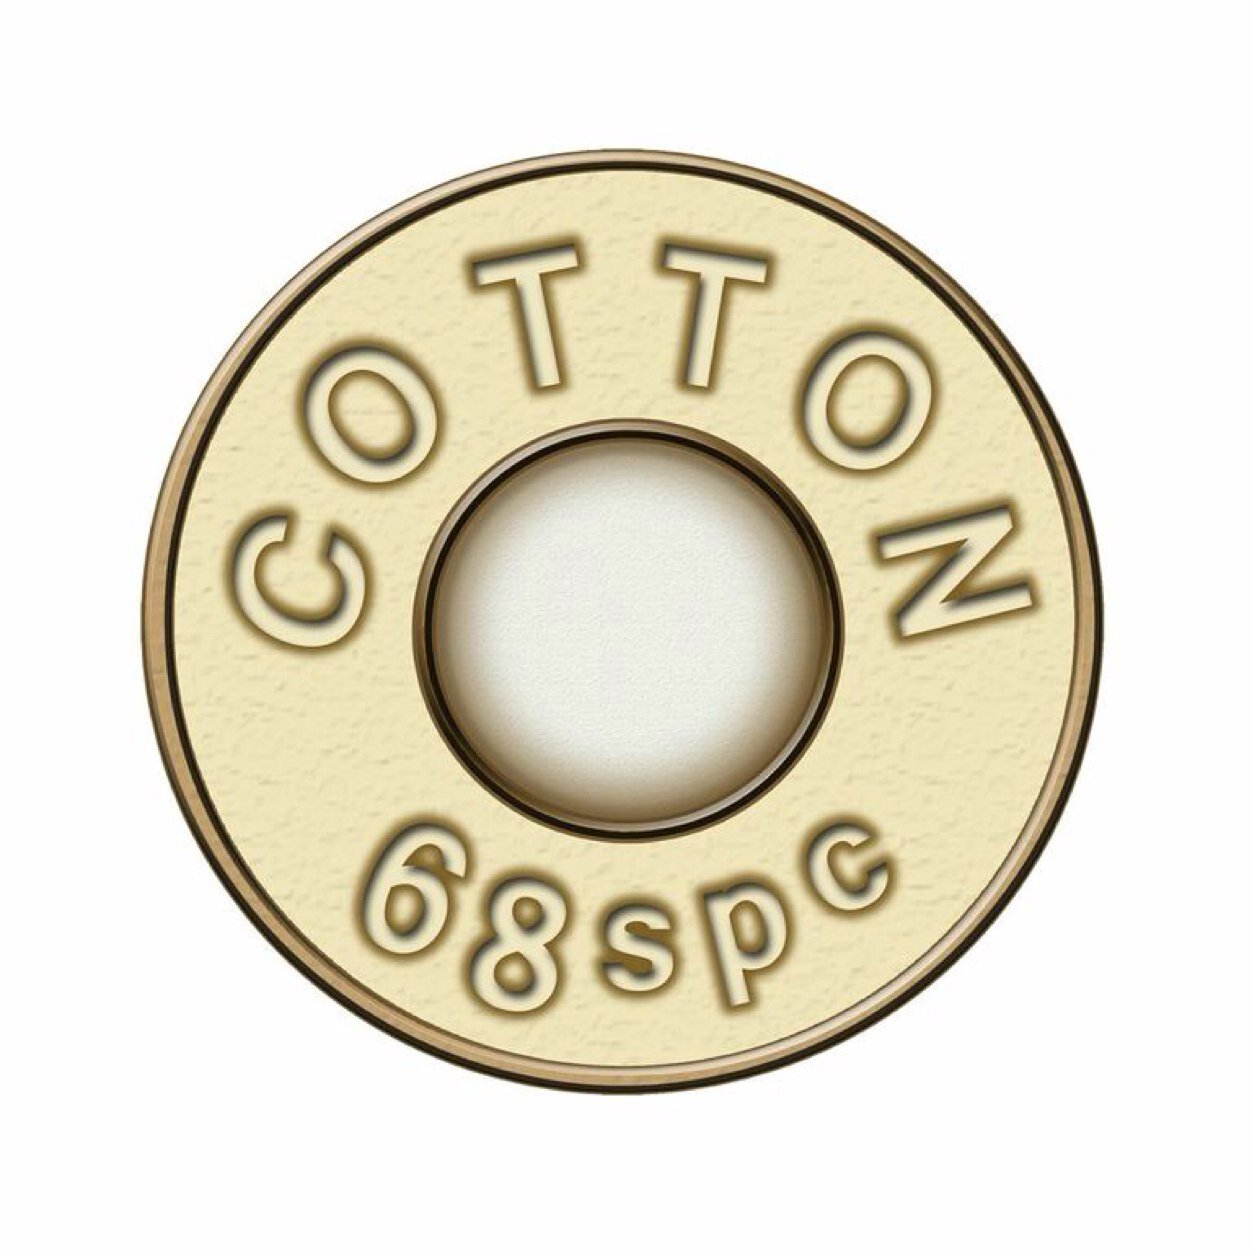 Cotton68spc